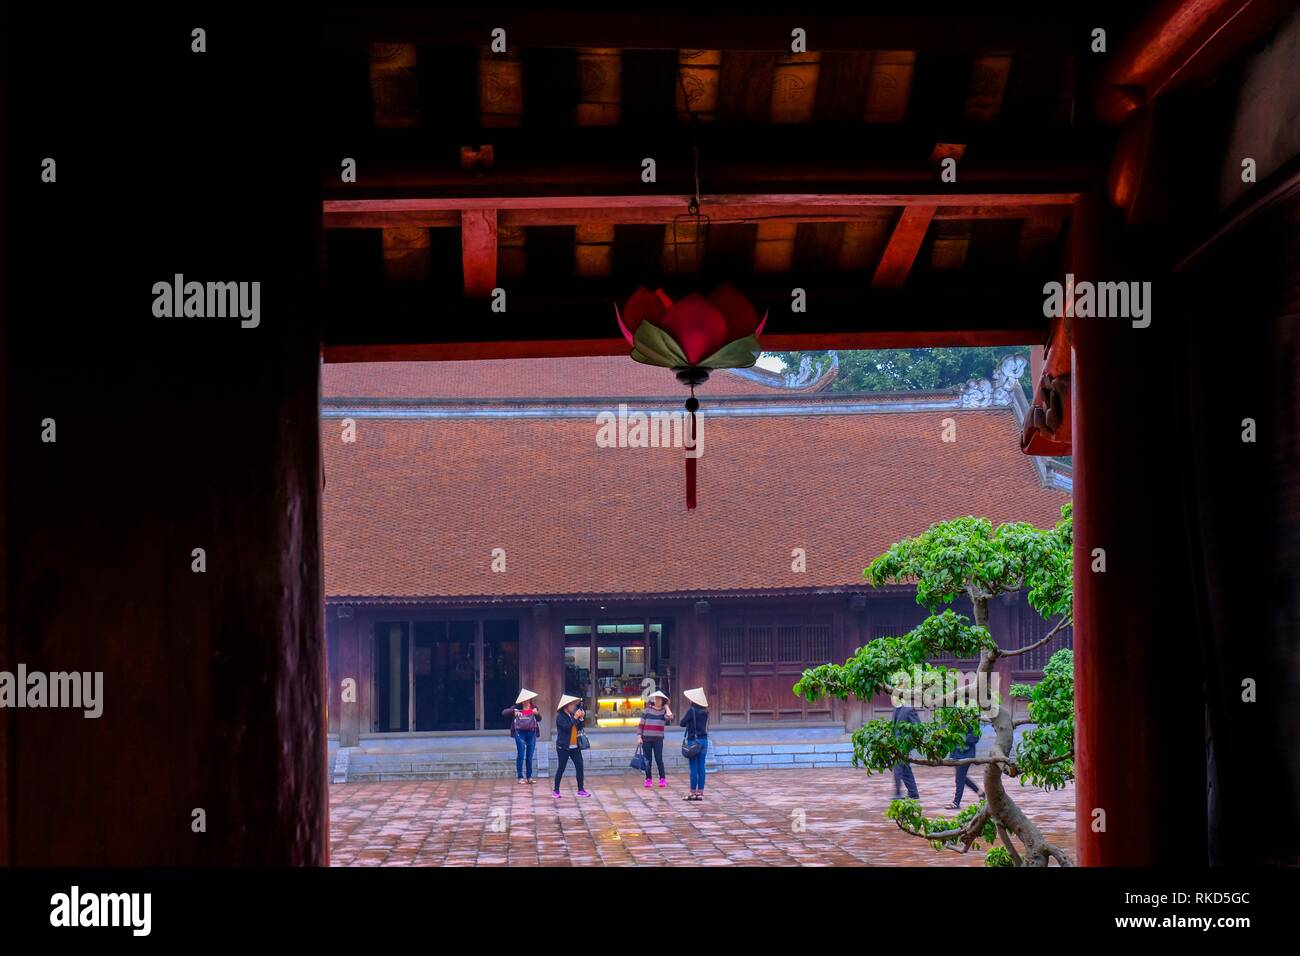 Vietnam, Temple of Literature, Hanoi. The Temple of Literature is a Temple of Confucius in Hanoi, northern Vietnam. The temple hosts the Imperial Stock Photo